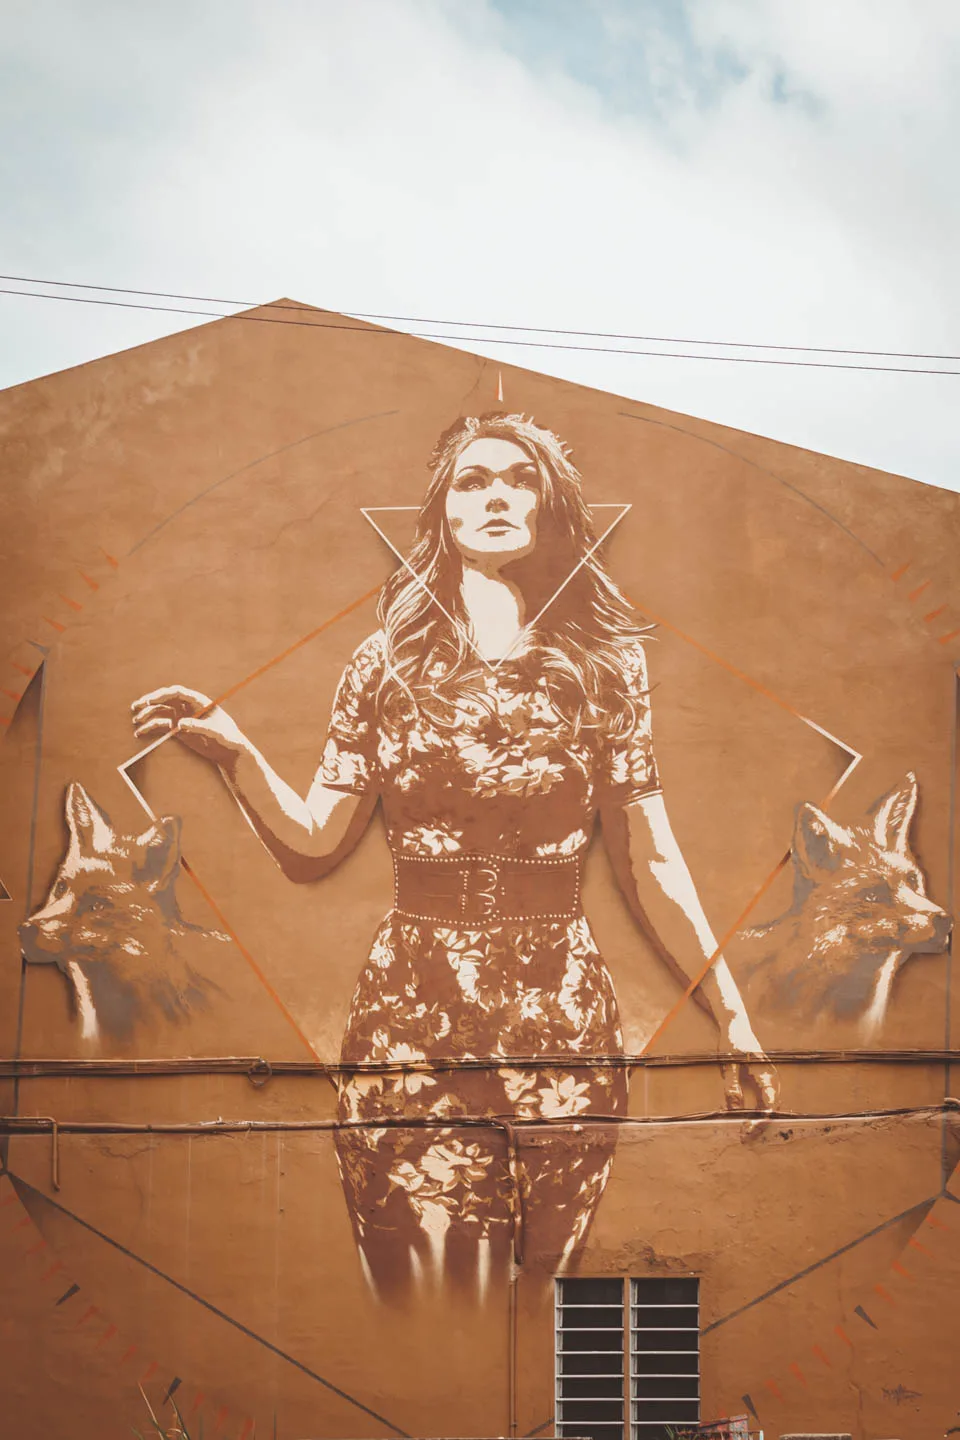 Fox Lady mural by Tank Petrol, Urban Xchange Crossing Over Hin Bus Depot